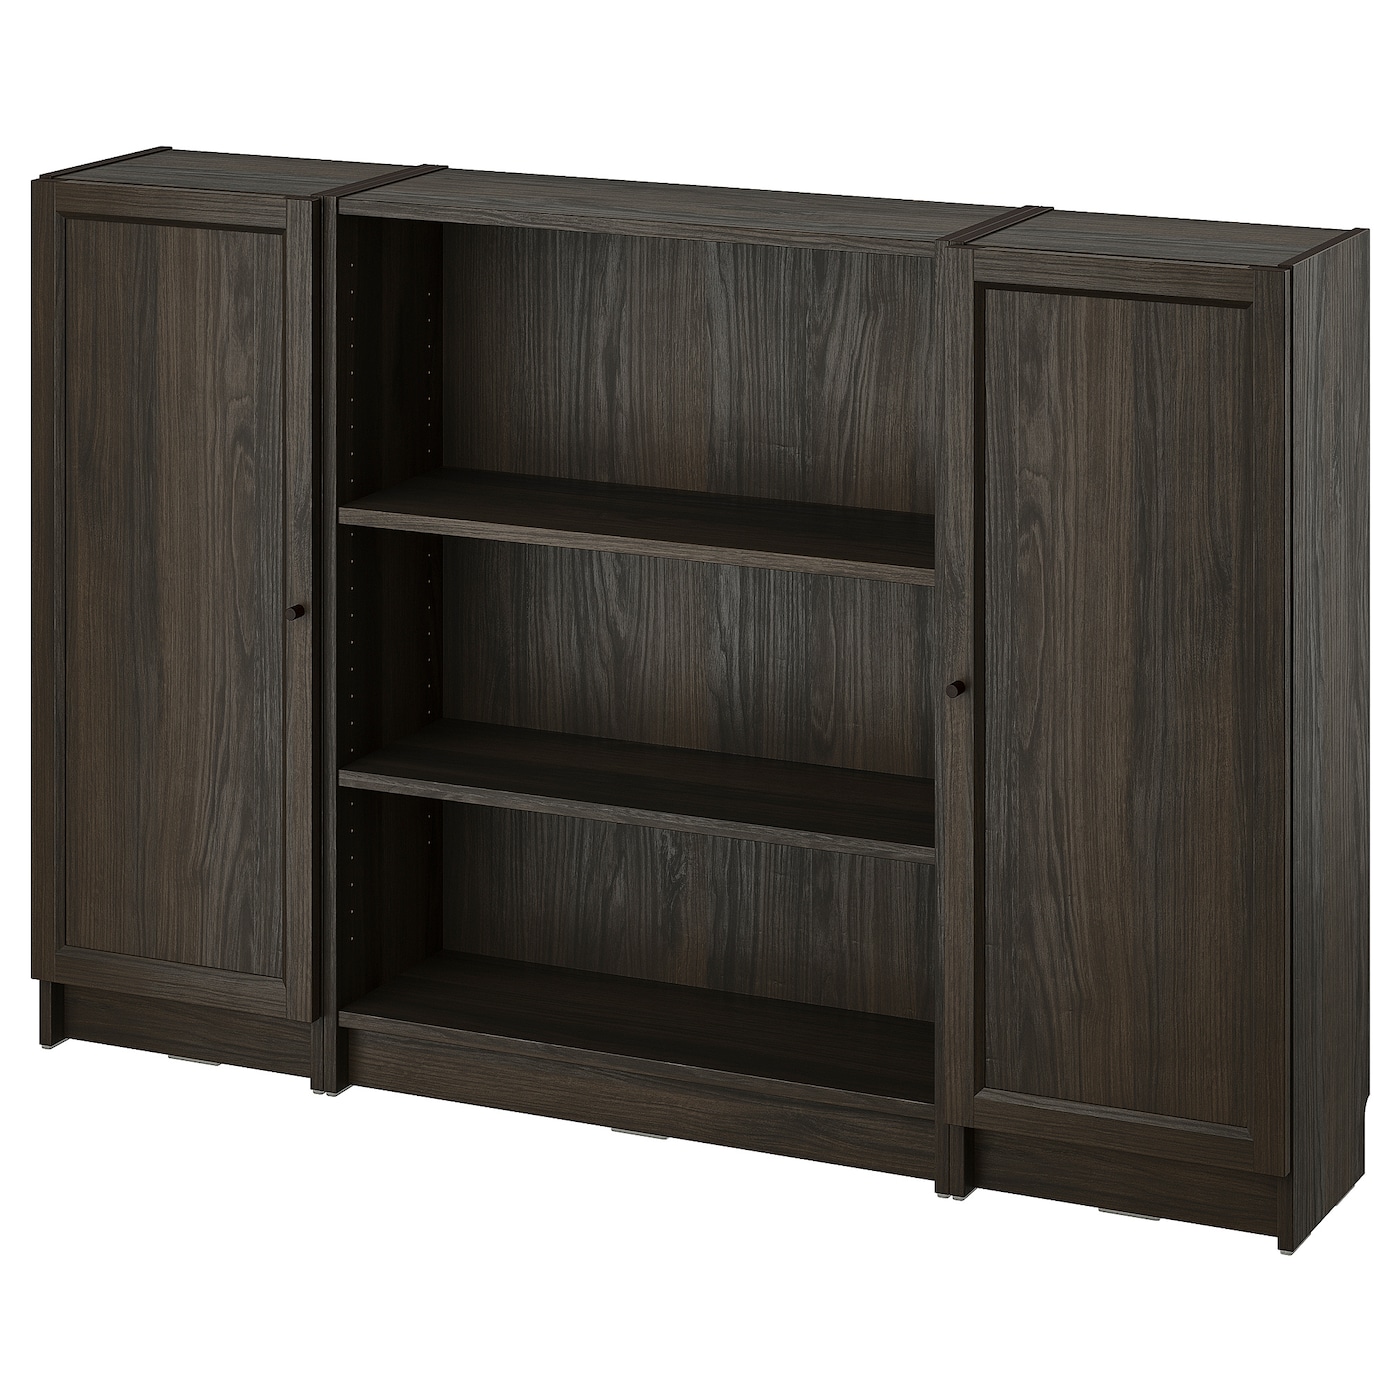 Книжный шкаф -  BILLY / OXBERG IKEA/ БИЛЛИ/ ОКСБЕРГ ИКЕА, 160х106 см, темно-коричневый